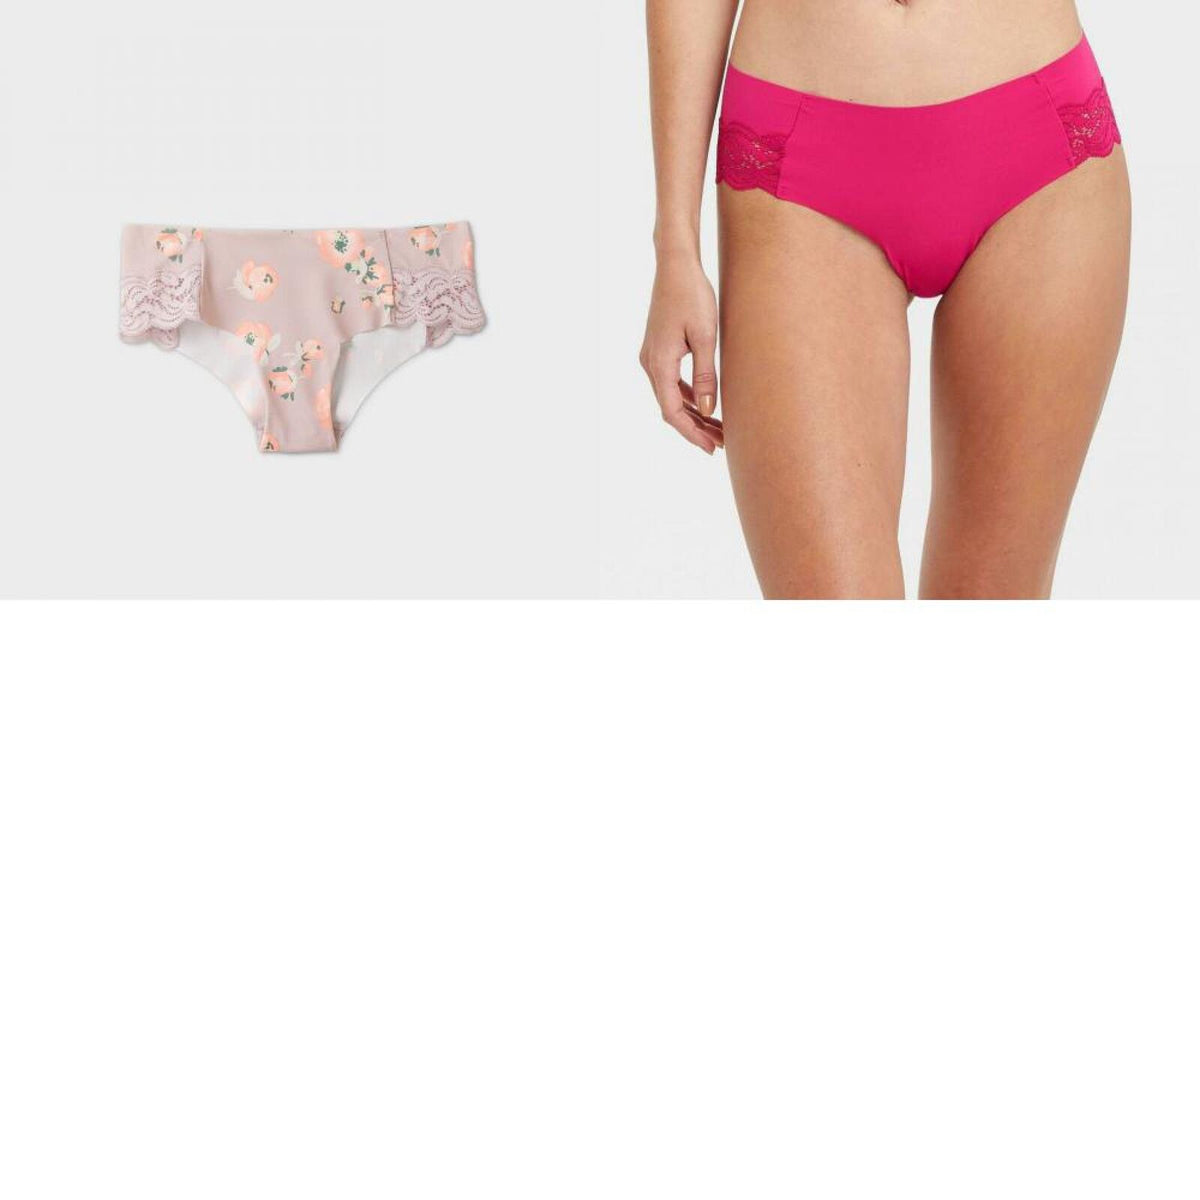 Auden Womens Laser Cut Cheeky Bikini Panties Mesh Back Underwear